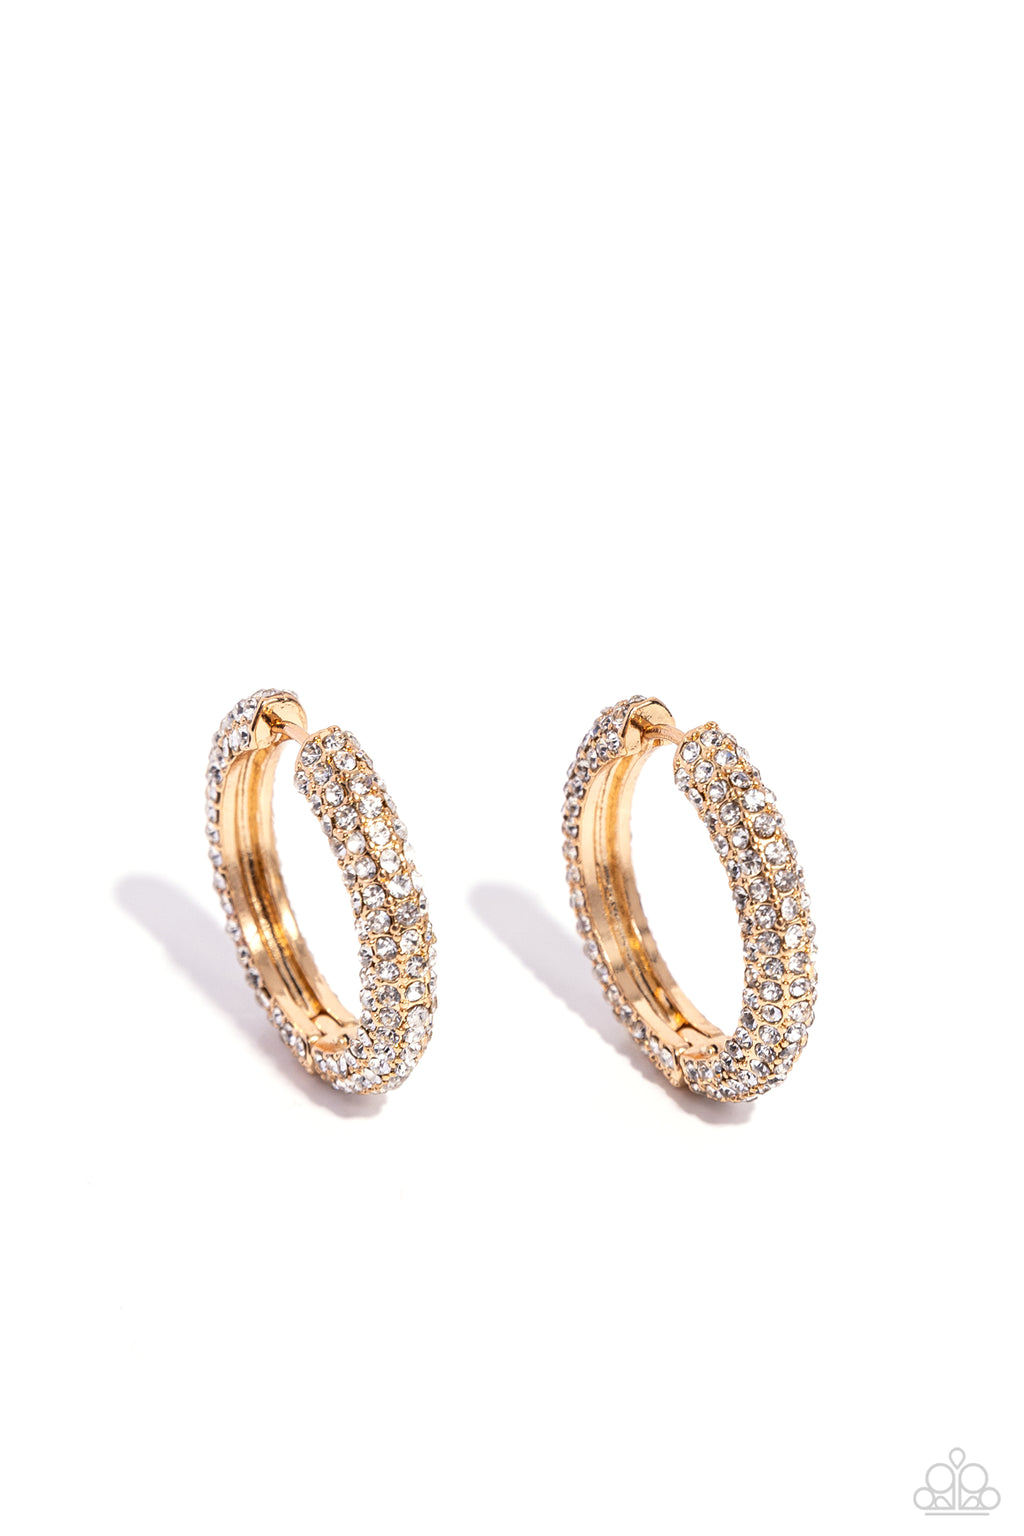 five-dollar-jewelry-glowing-praise-gold-earrings-paparazzi-accessories